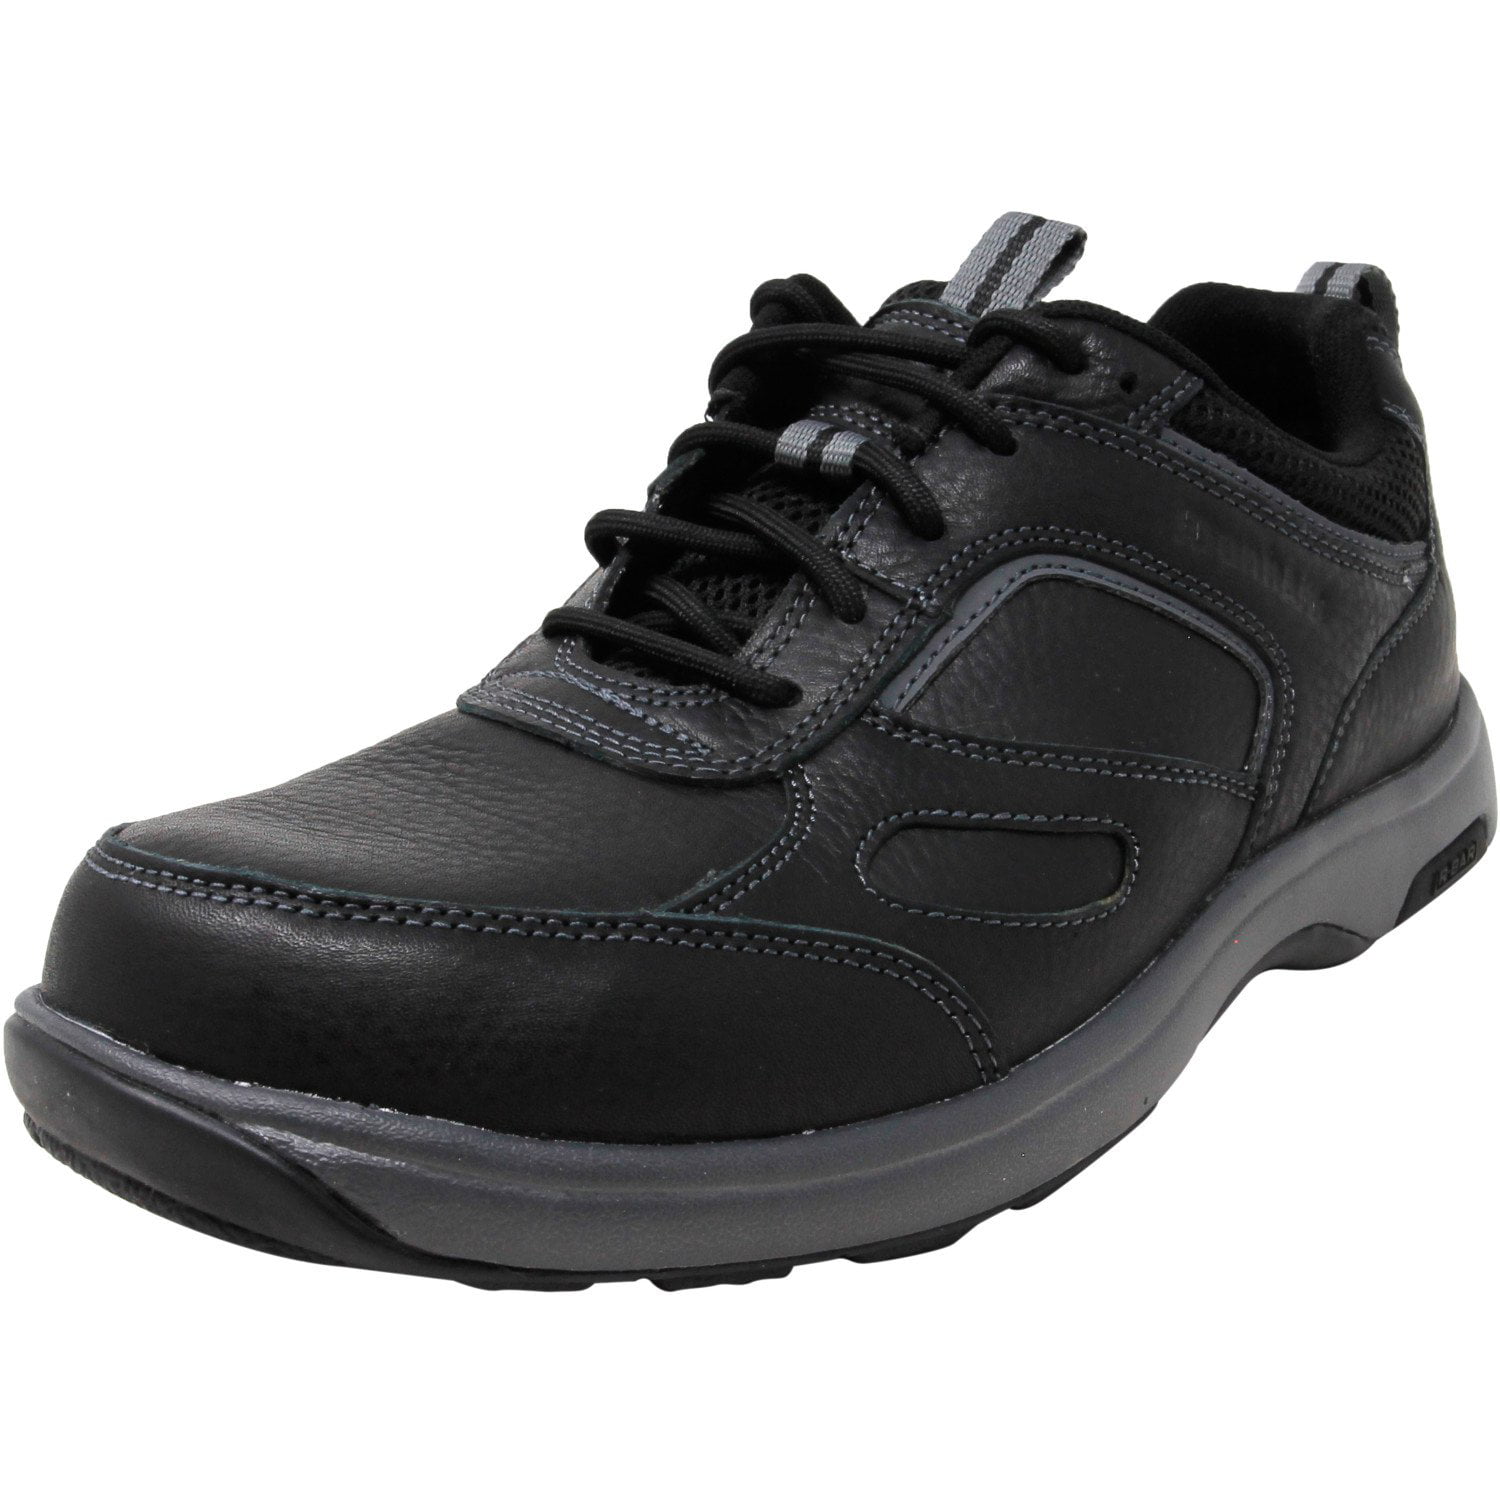 Dunham Men's Ubal Black Ankle-High Leather Fashion Sneaker - 11WWW ...